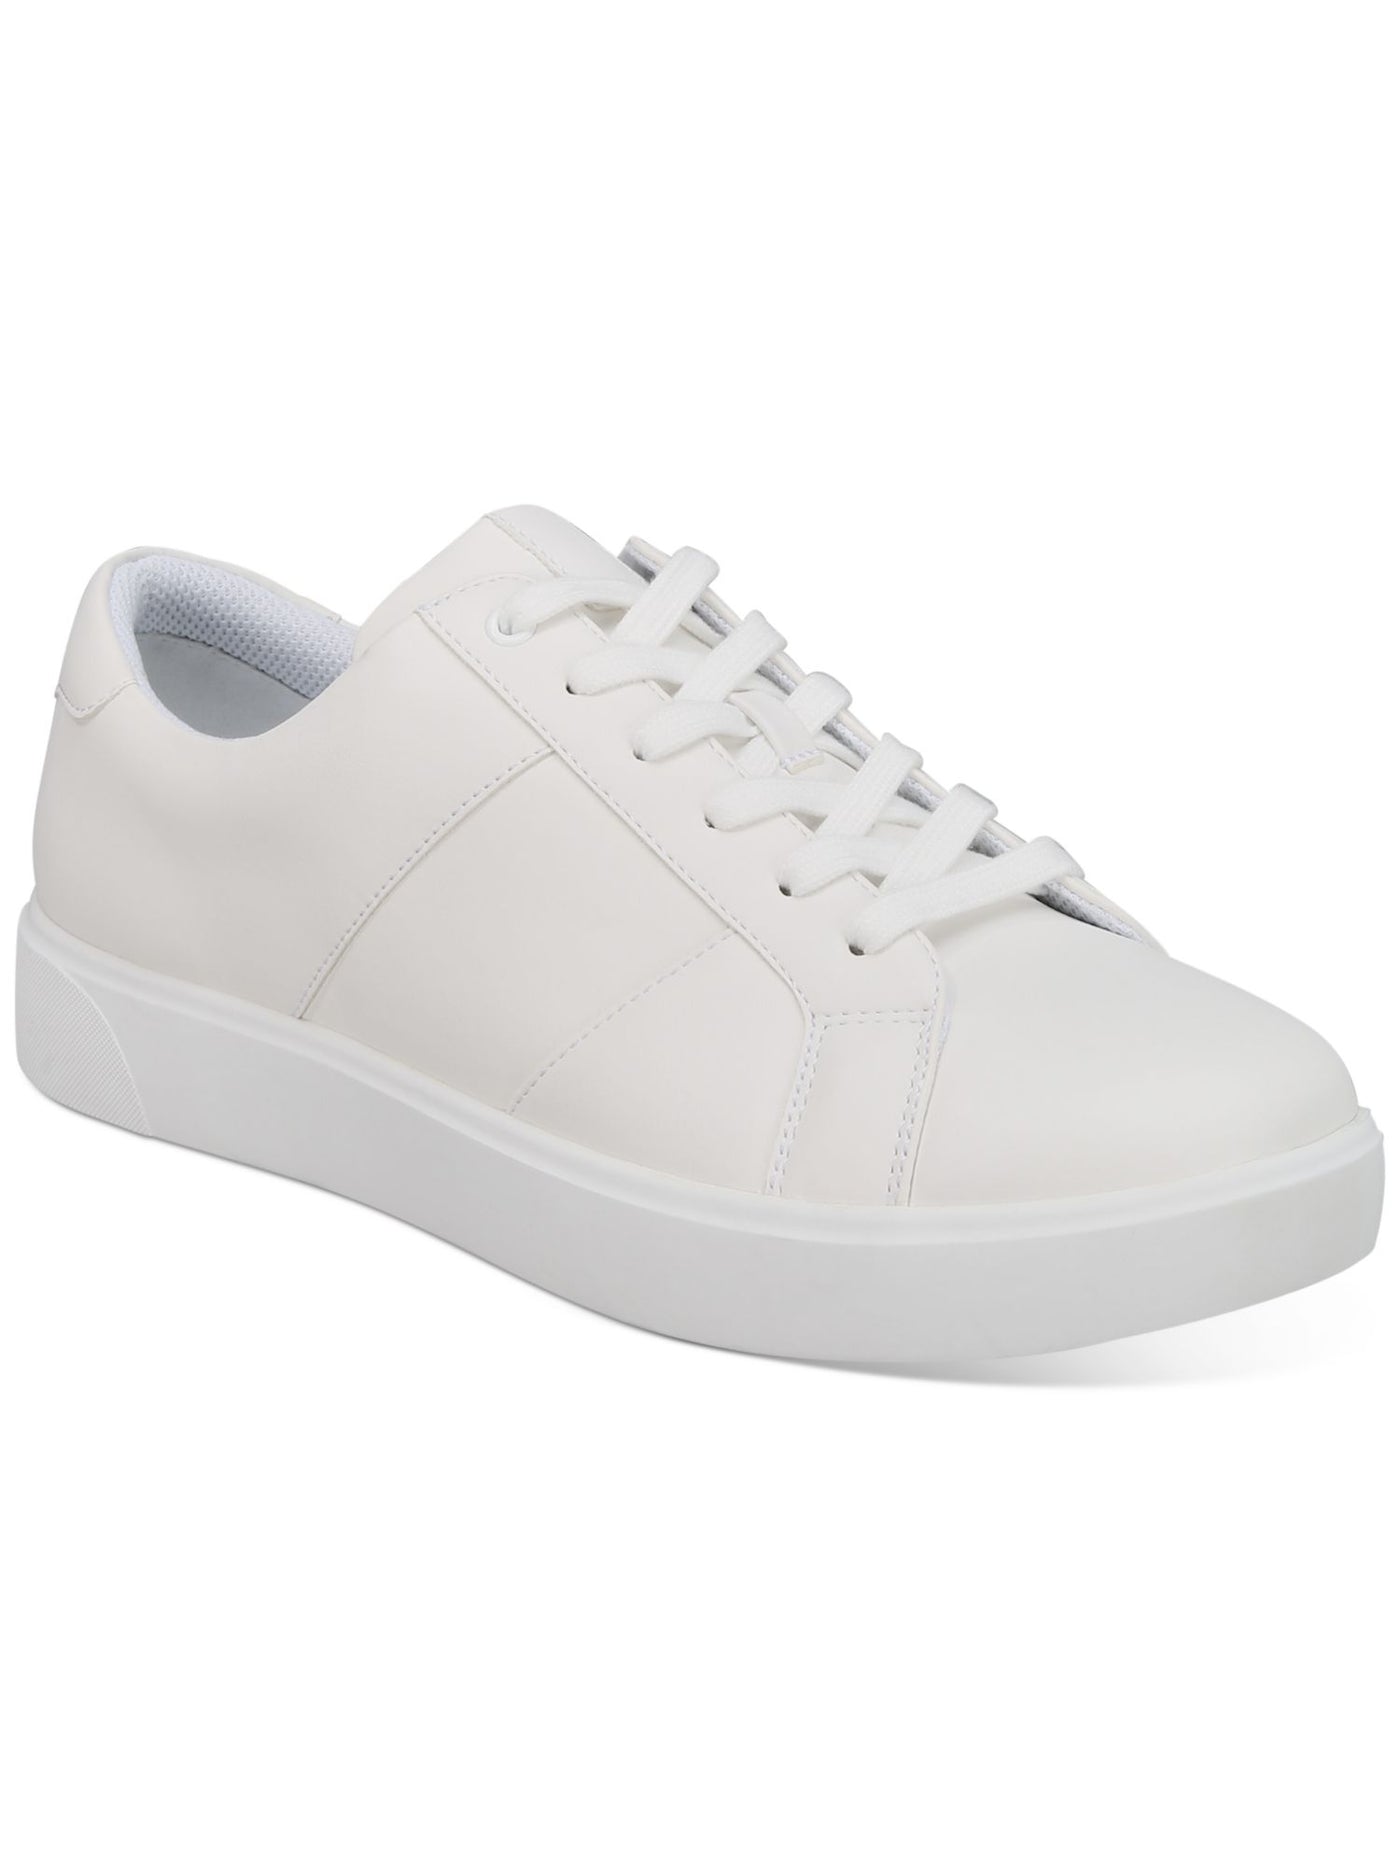 INC Mens White Comfort Ezra Round Toe Platform Lace-Up Athletic Sneakers Shoes 8 M